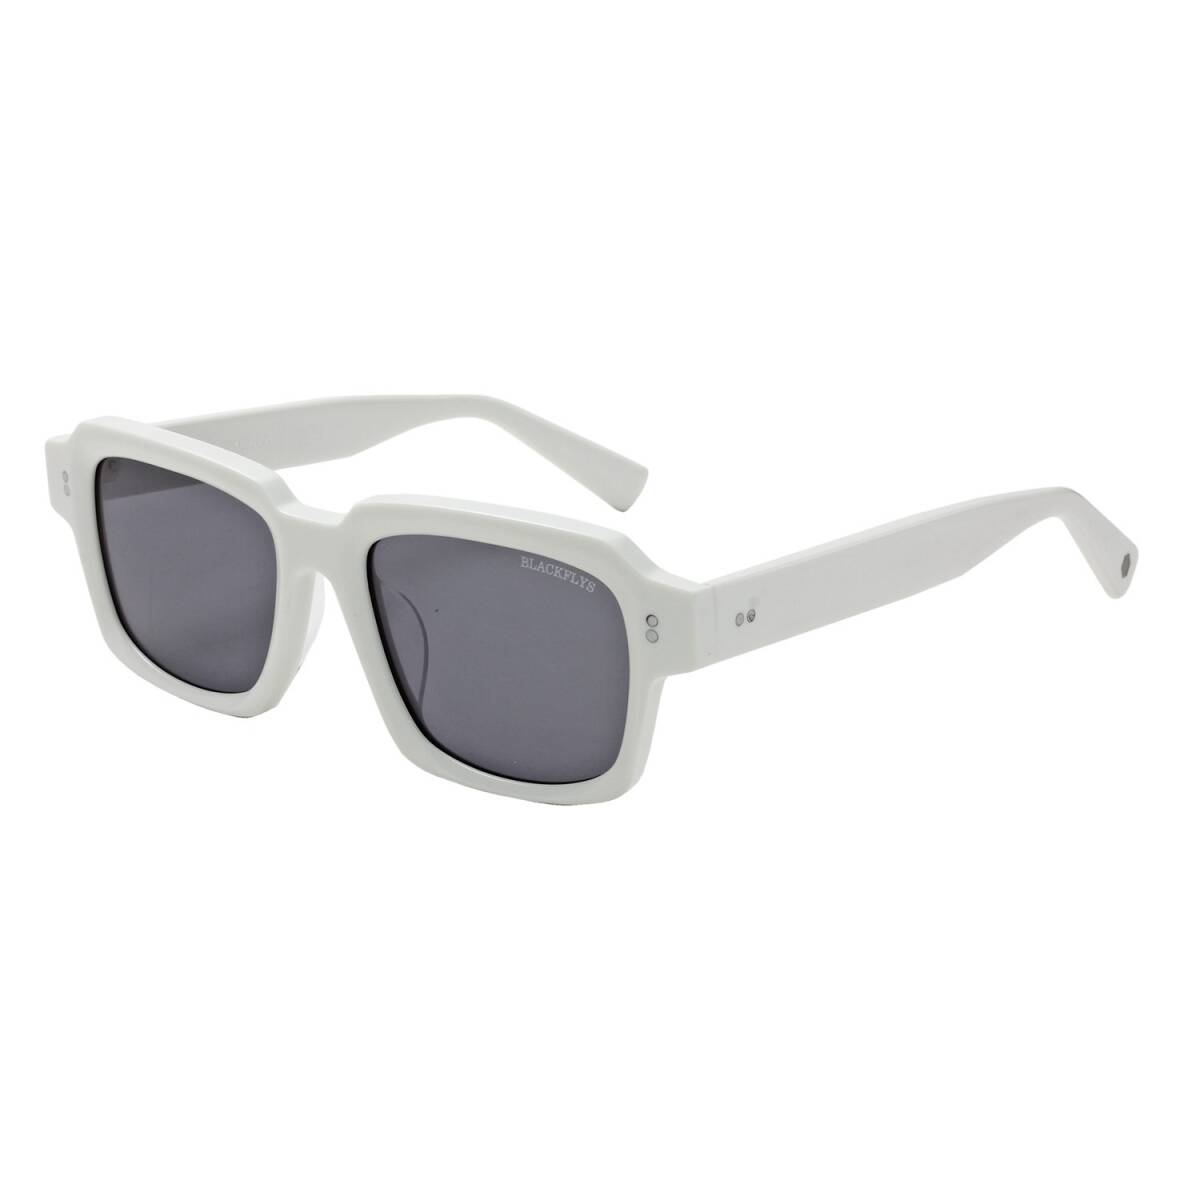 BLACKFLYS/ Black Fly z/FLY DOWNEY/f rider sea urchin -/ sunglasses / square type / white × gray /51*20-140/ glasses / glasses 